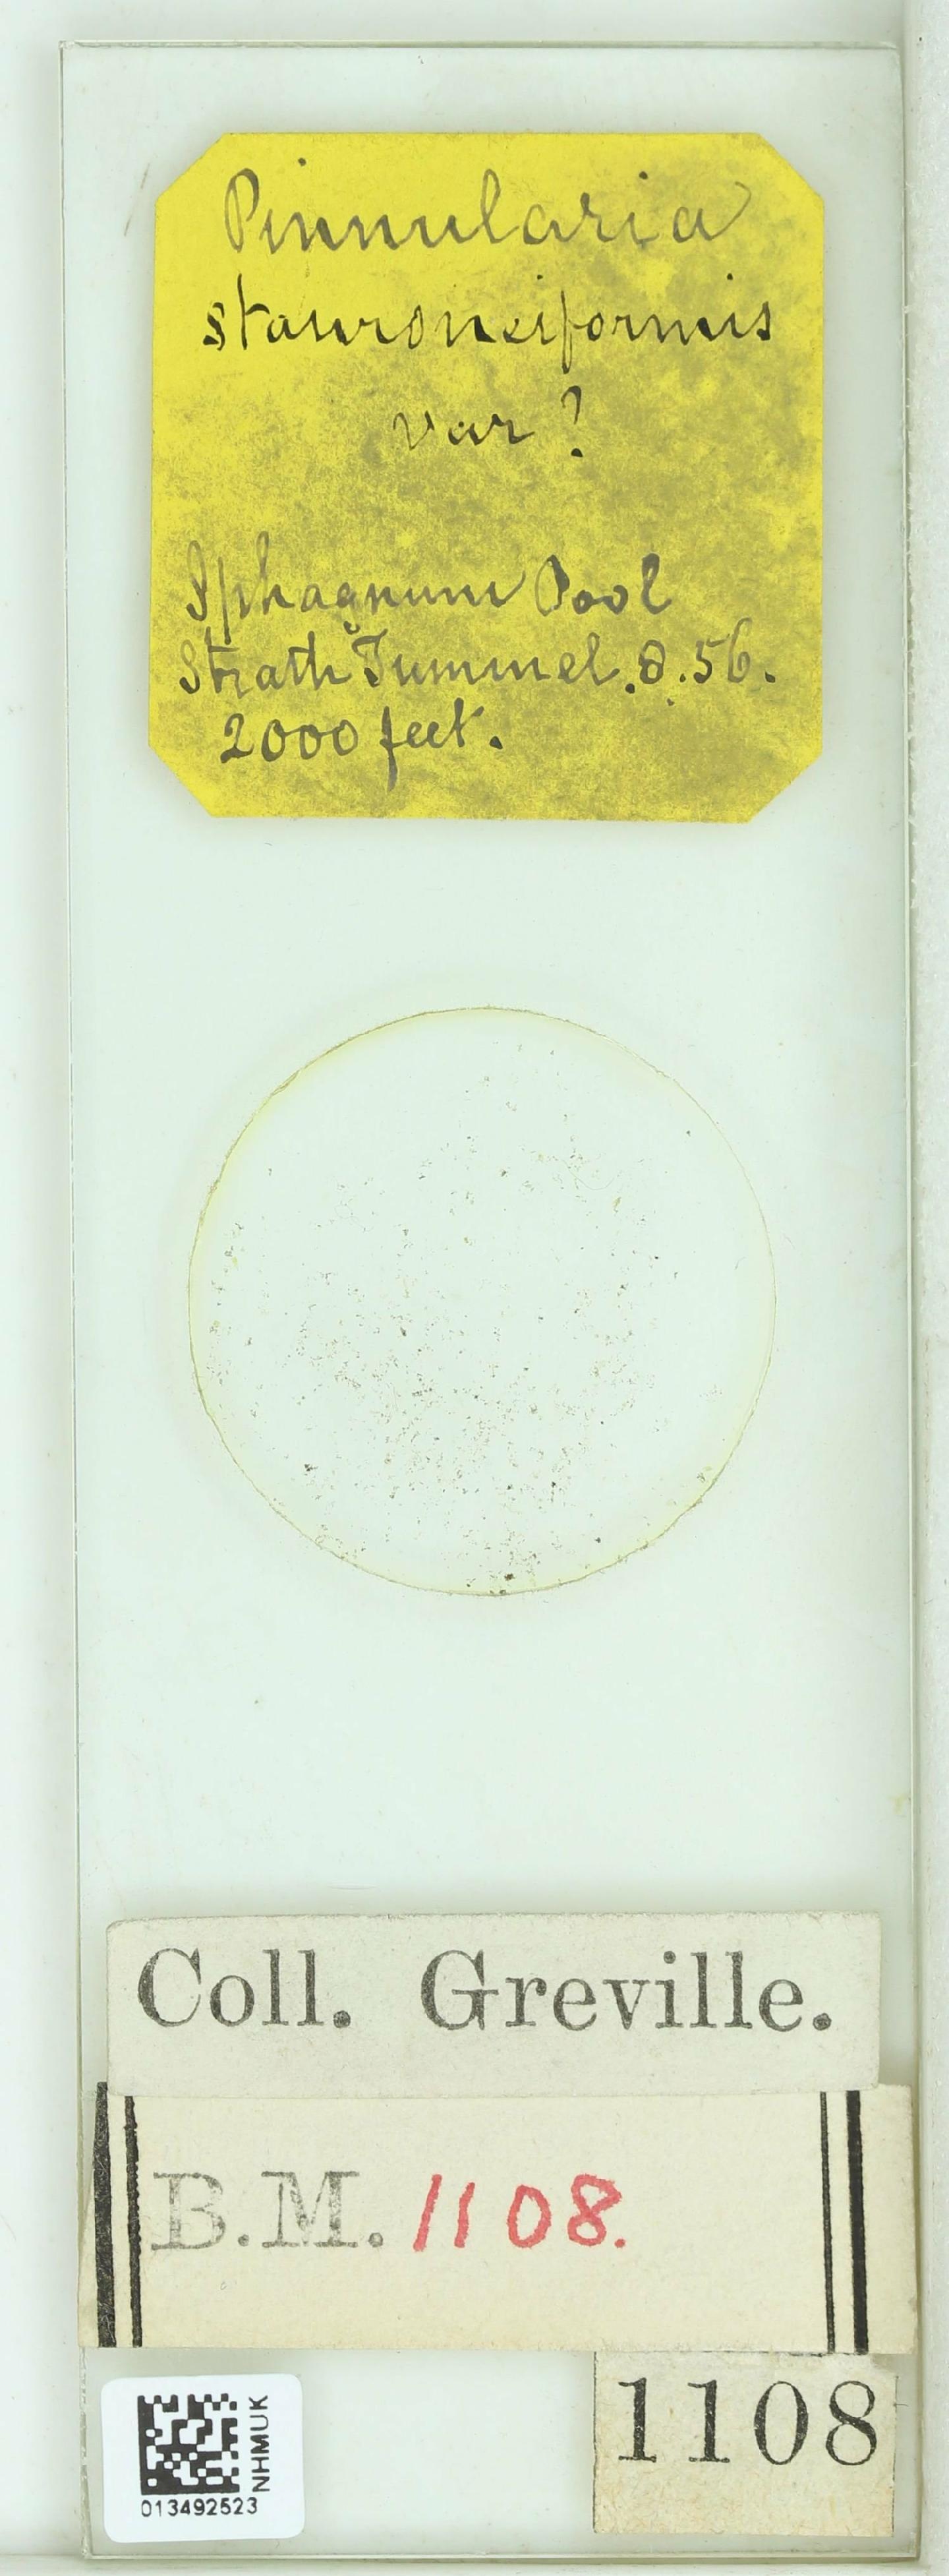 To NHMUK collection (Pinnularia stauroneiformis W.Sm.; NHMUK:ecatalogue:4732021)